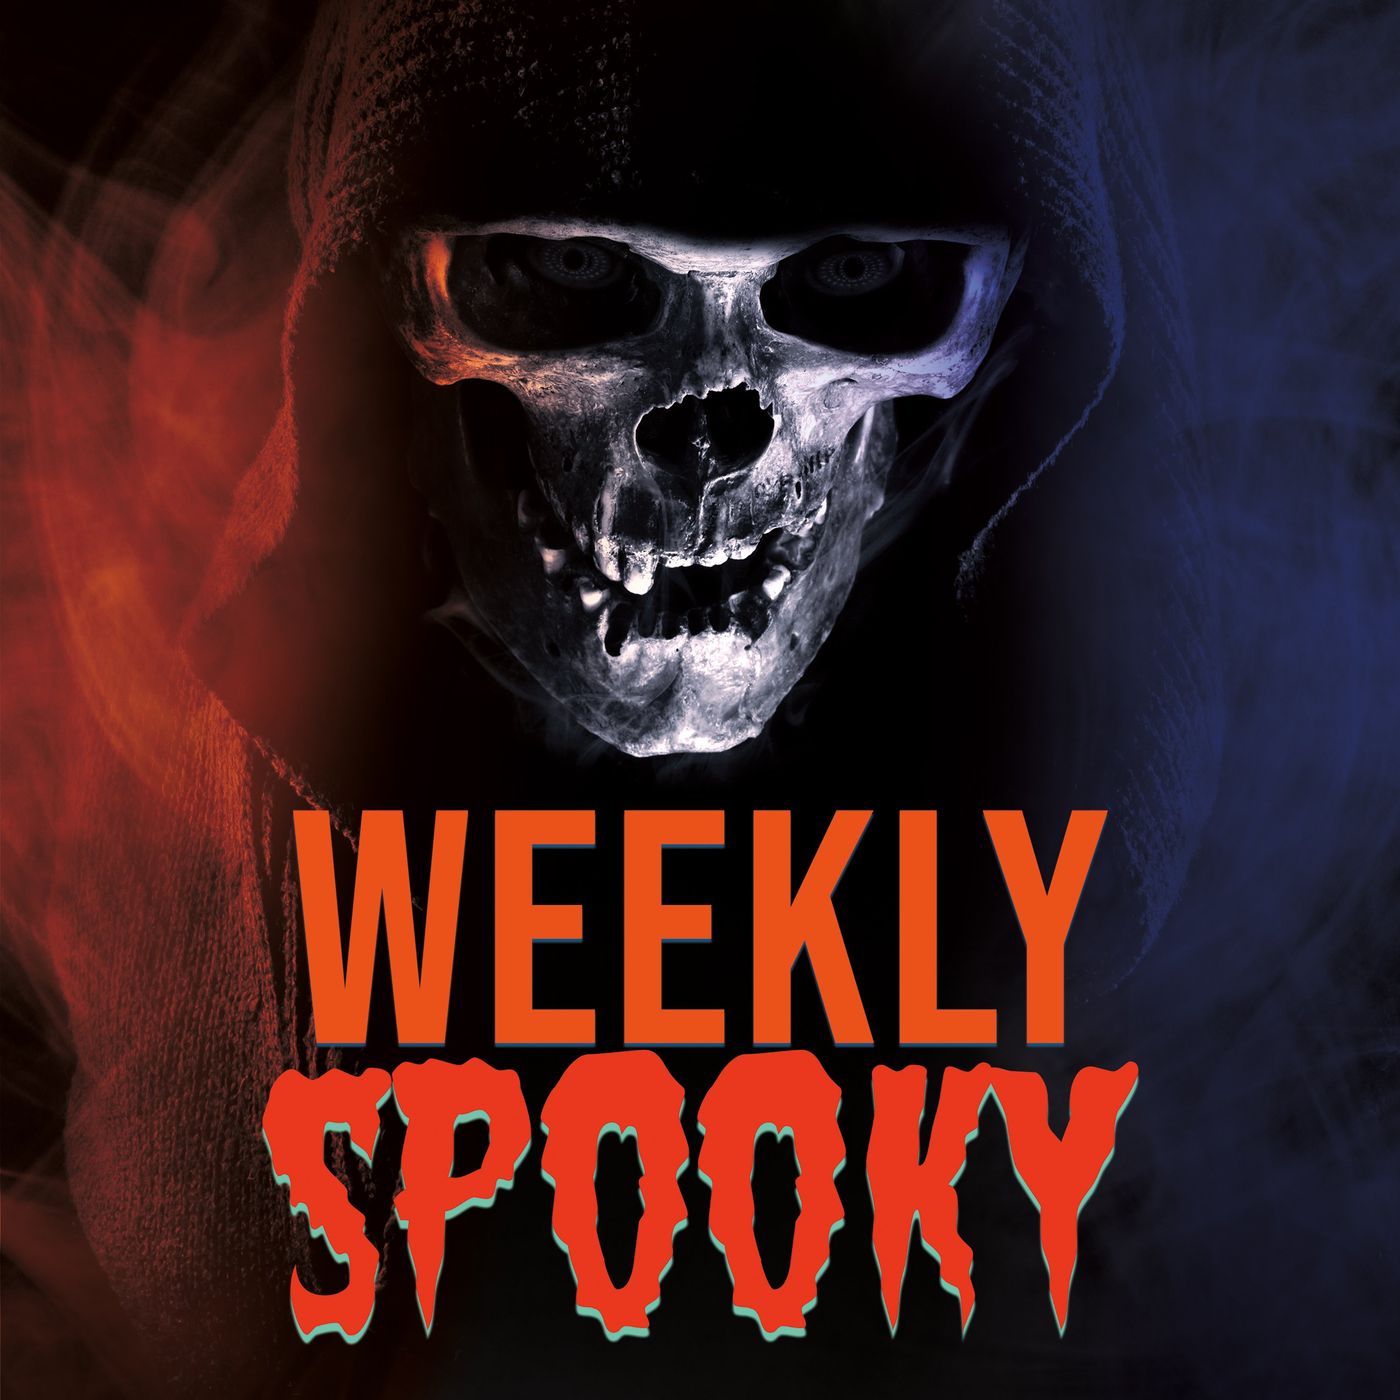 Weekly Spooky Trailer - 2022 Image